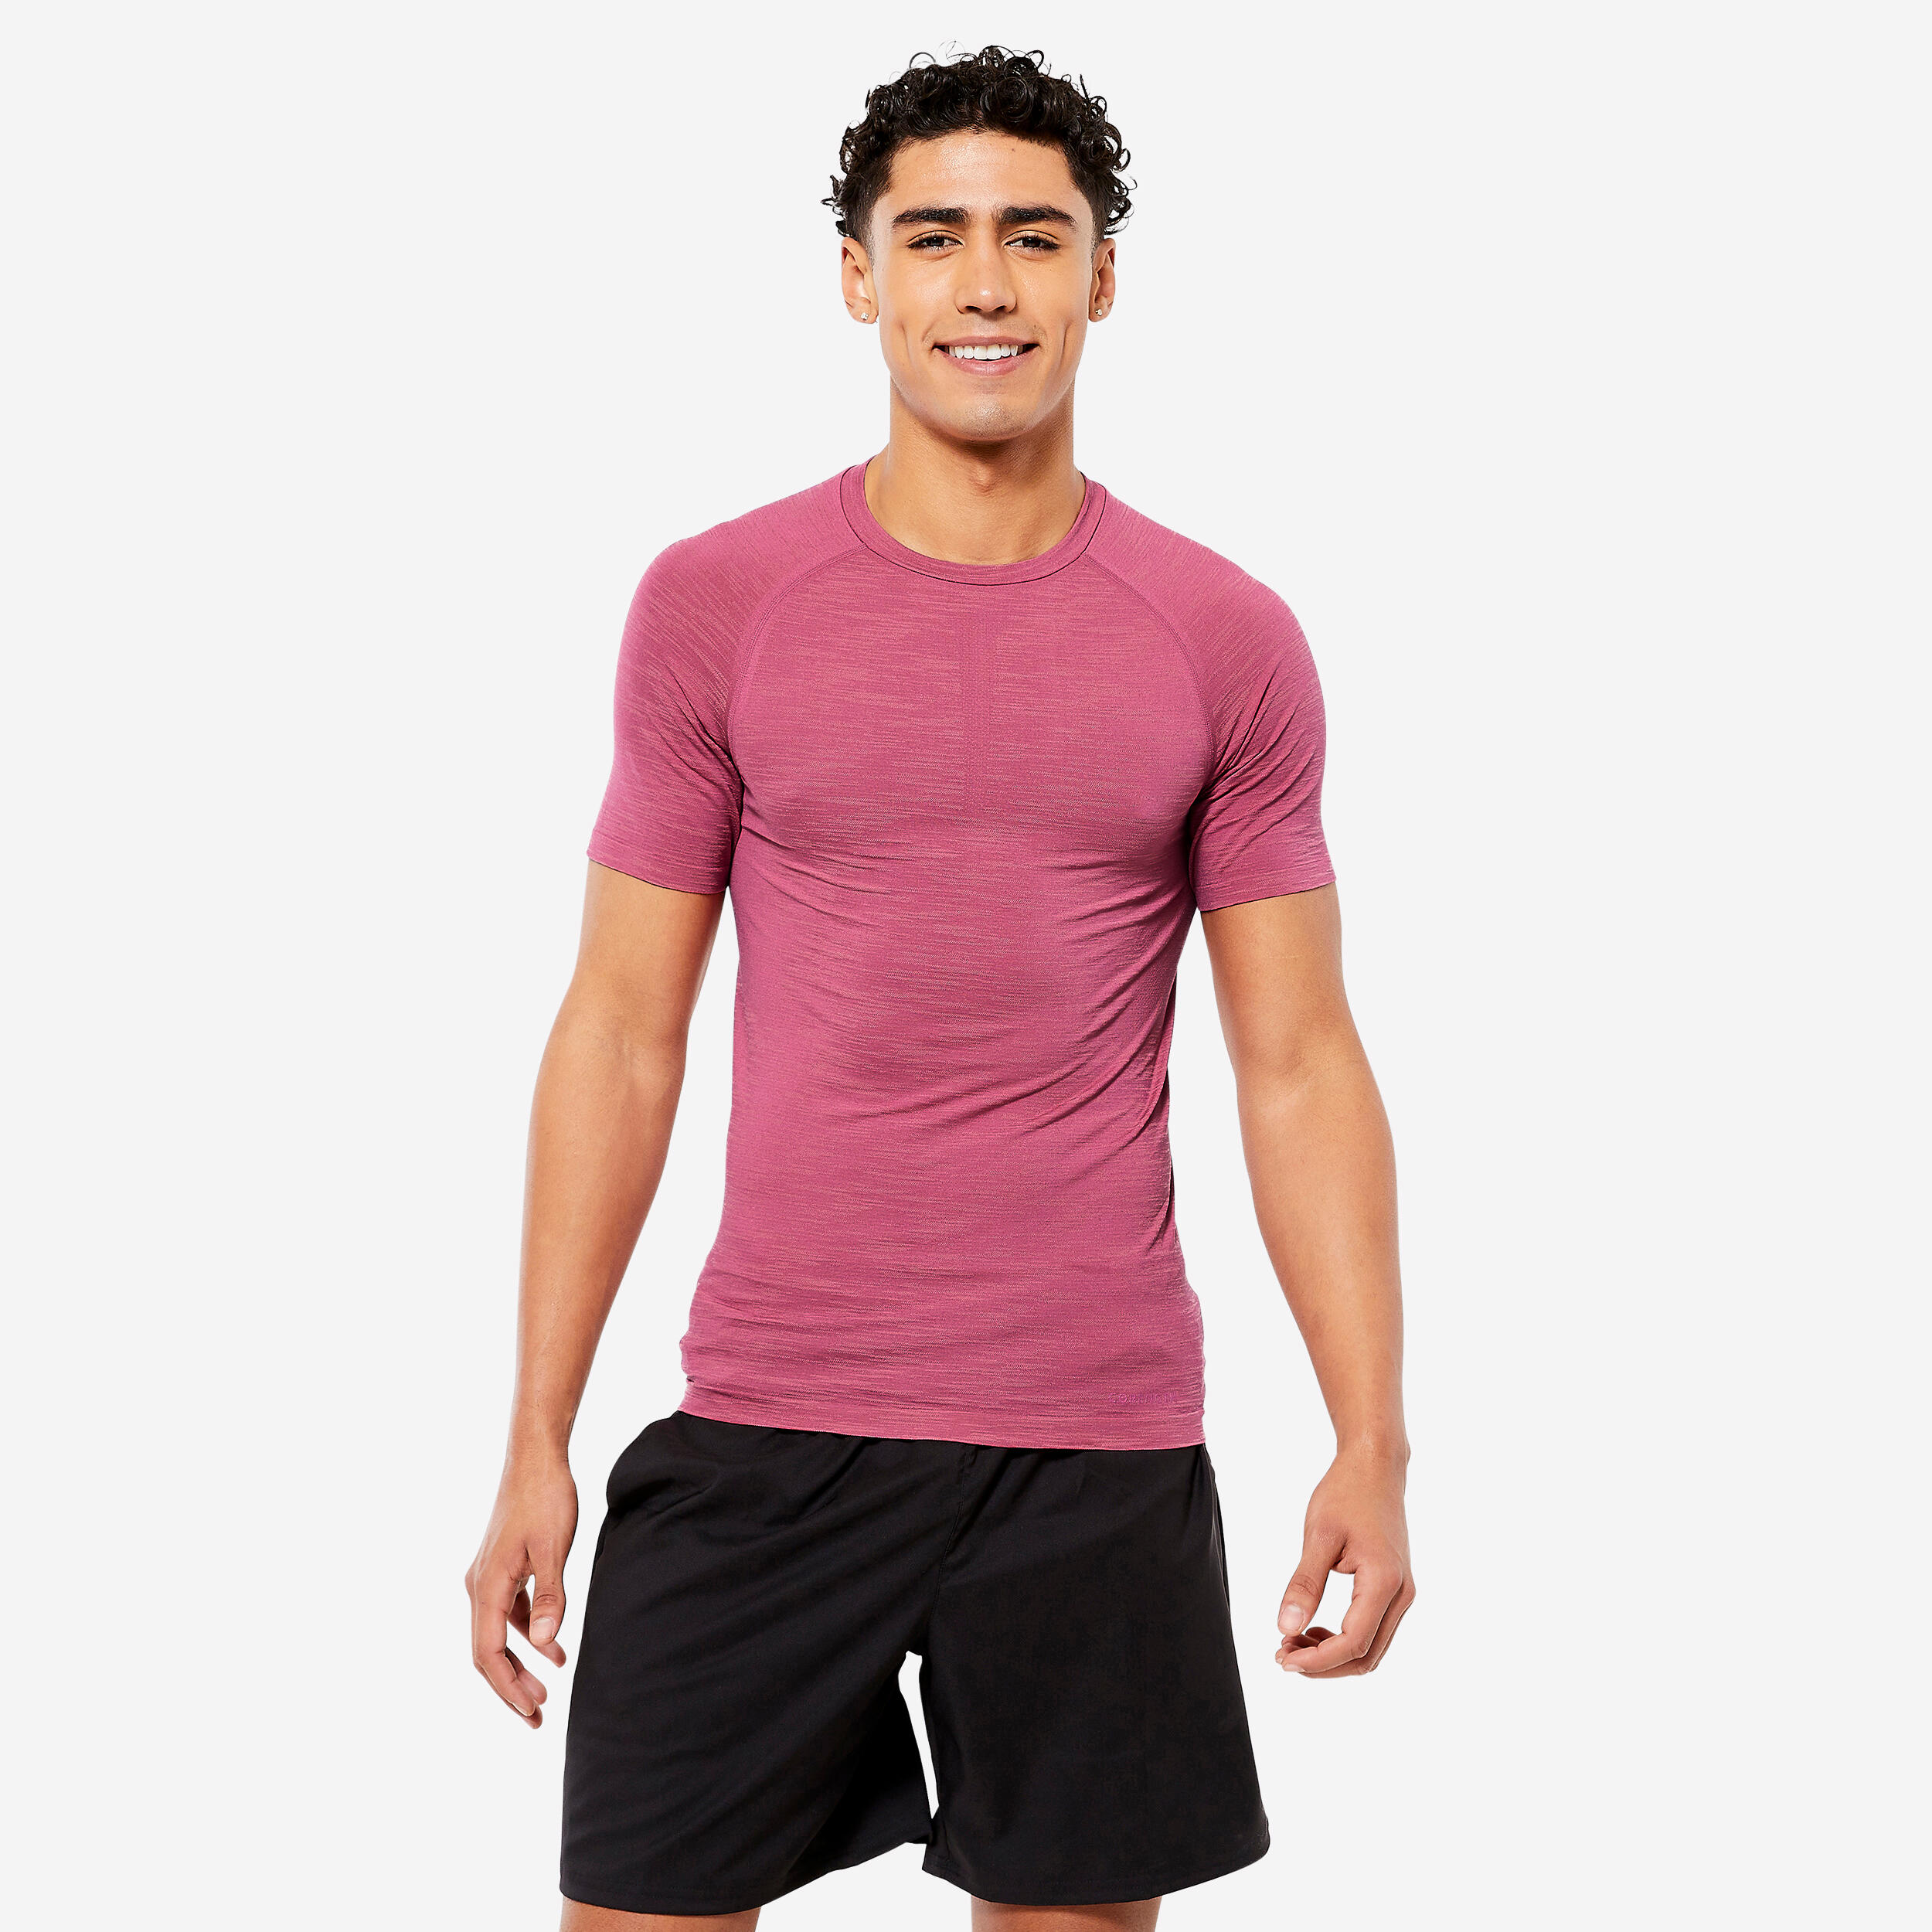 DOMYOS Weight Training Compression T-Shirt - Pink Marl